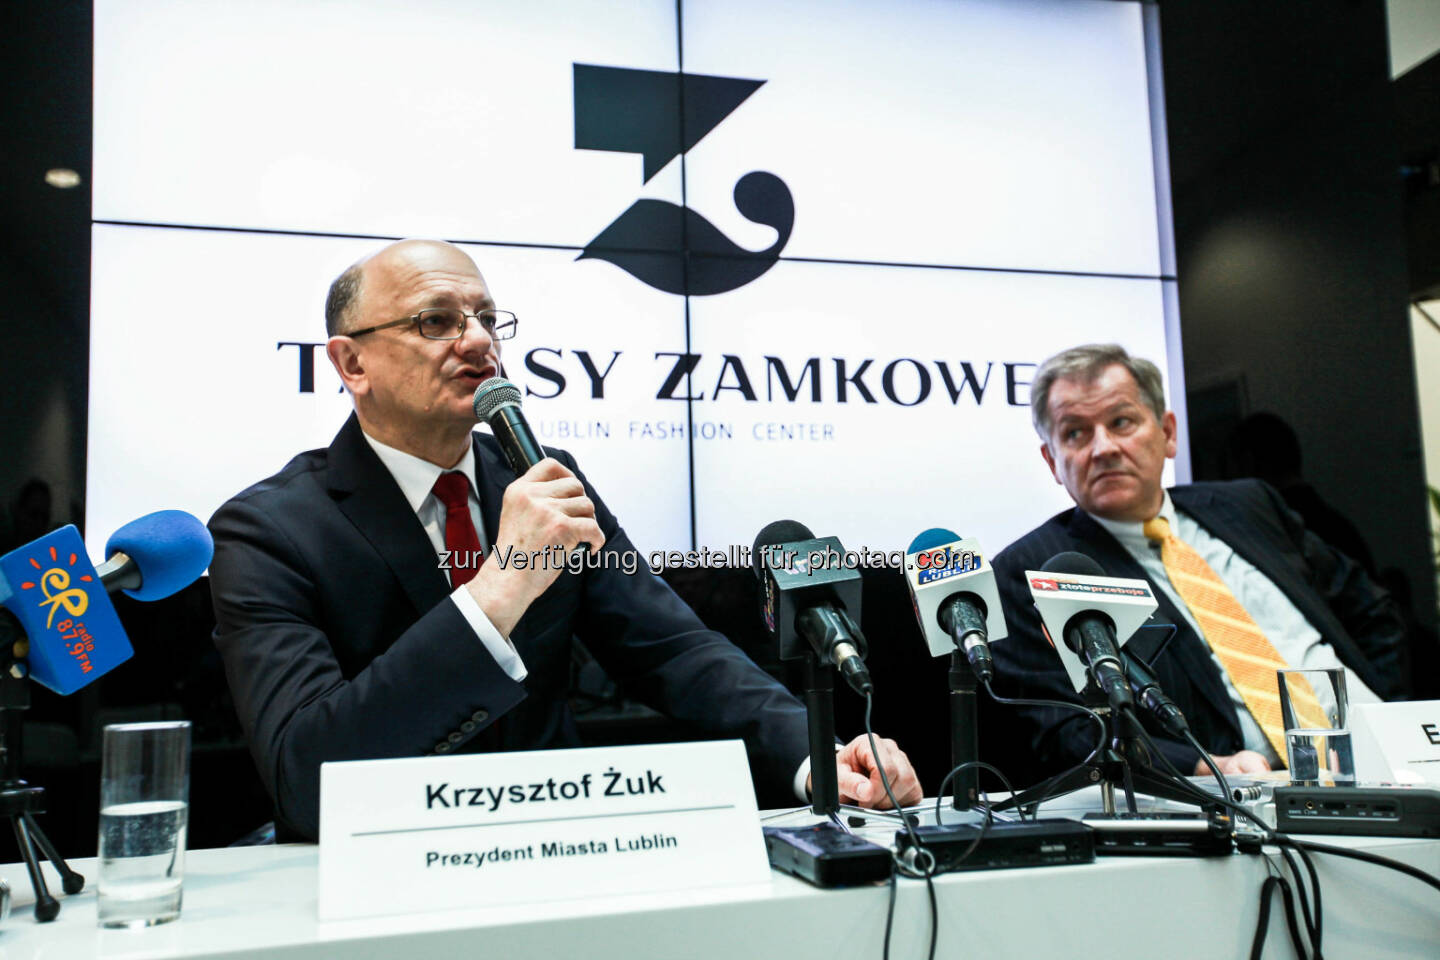 Krzysztof Żuk (Mayor of the City of Lublin), Eduard Zehetner (CEO Immofinanz Group): anlässlich der Eröffnung des Shopping Center Tarasy Zamkowe in Lublin